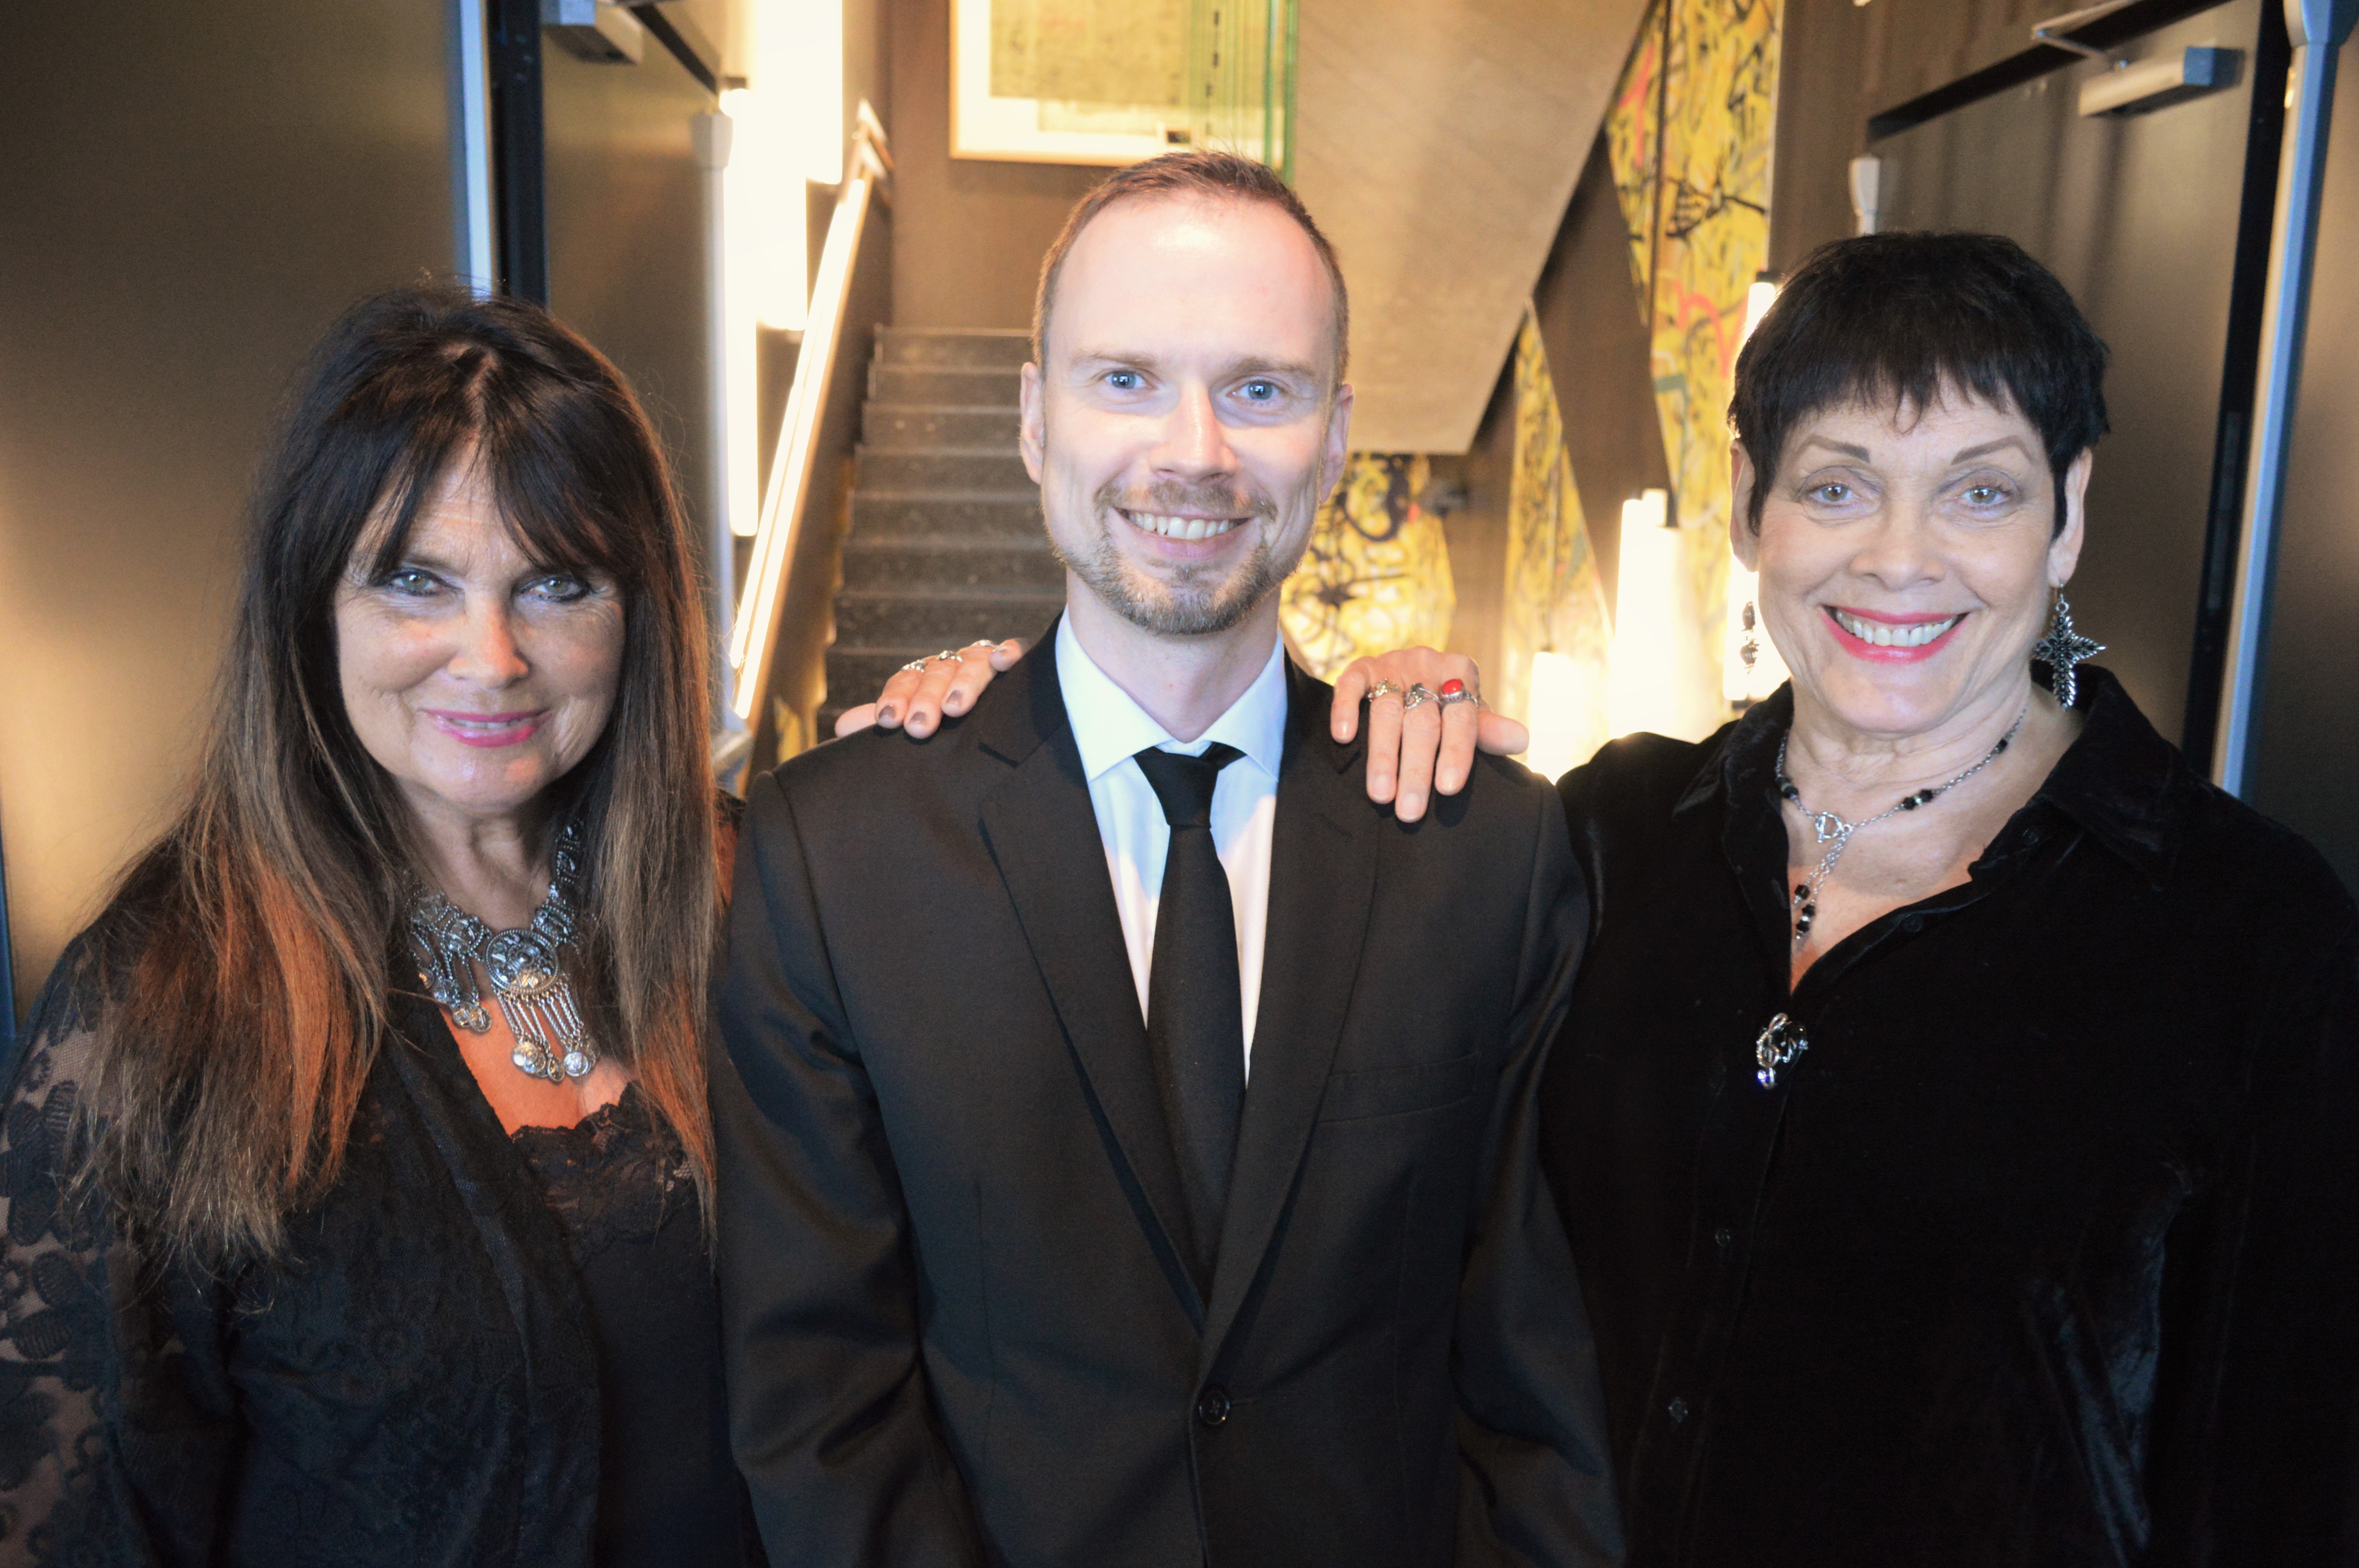 Caroline Munro, Brian Iskov and Martine Beswick in Oslo 01.09.2016 - © Brian Iskov